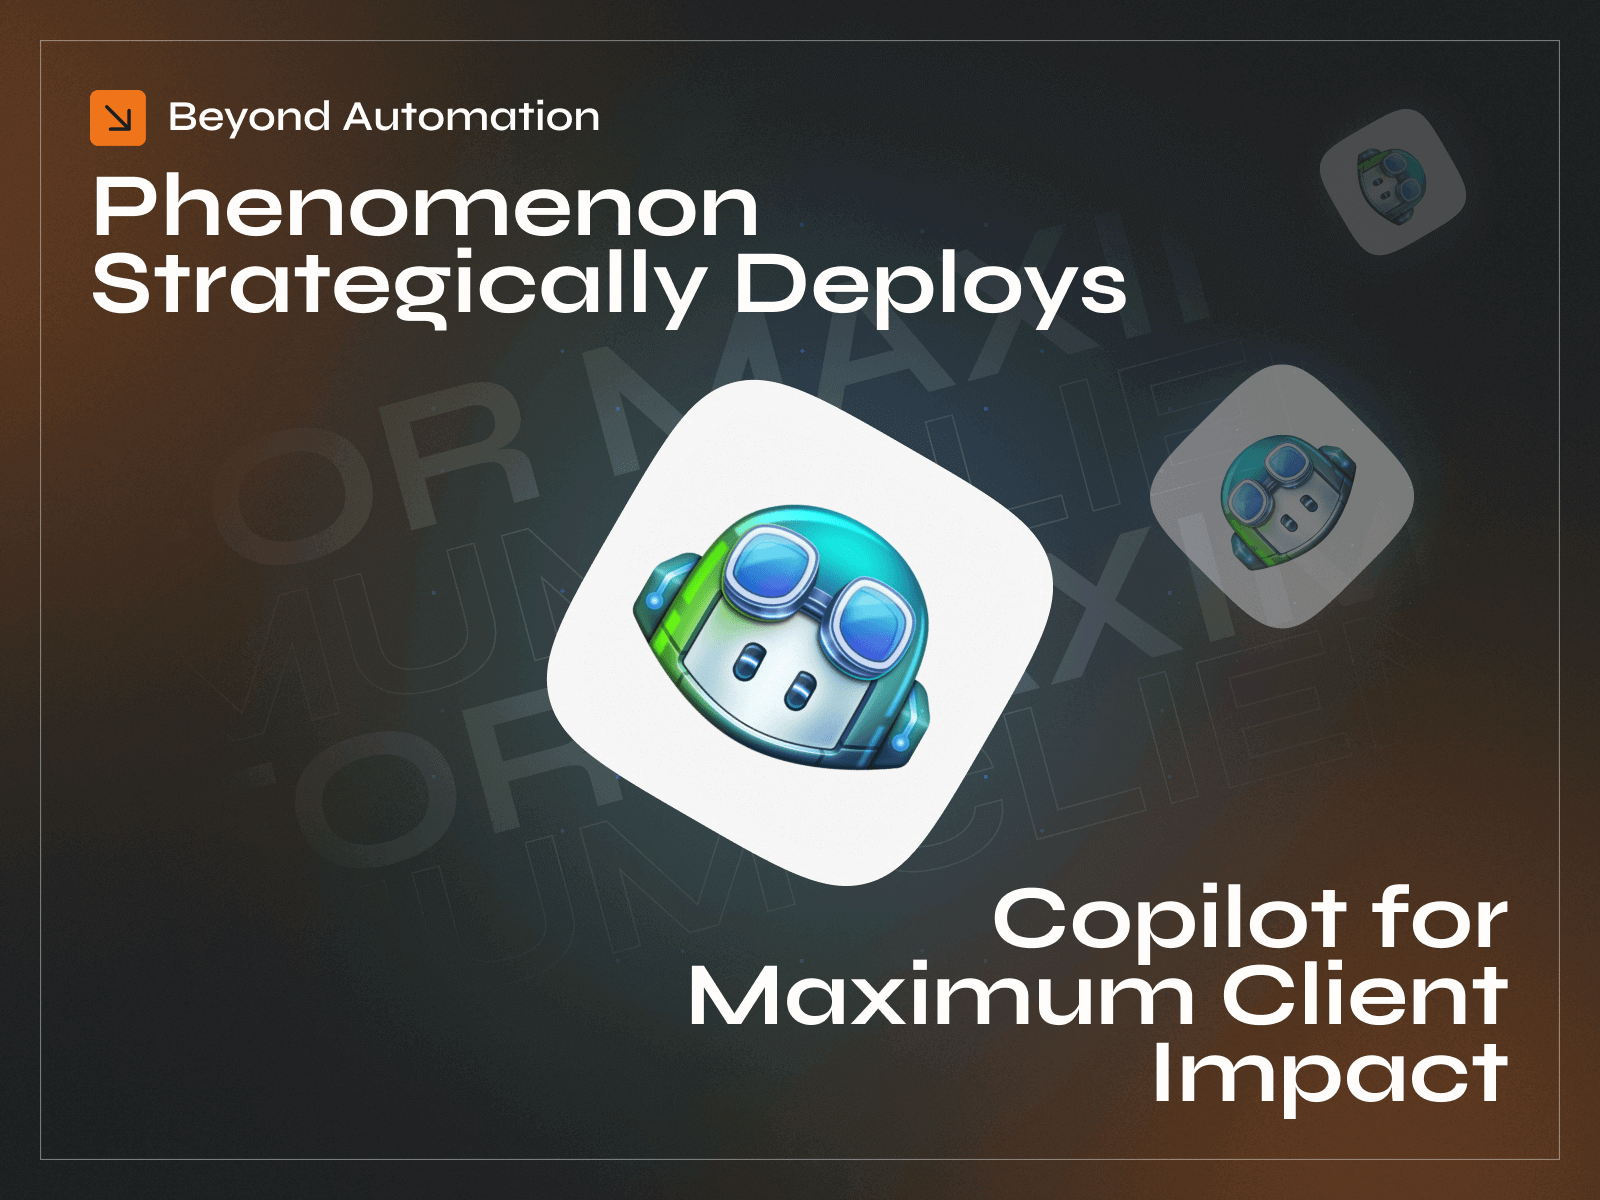 Beyond Automation: Phenomenon Strategically Deploys Copilot for Maximum Client Impact - Photo 